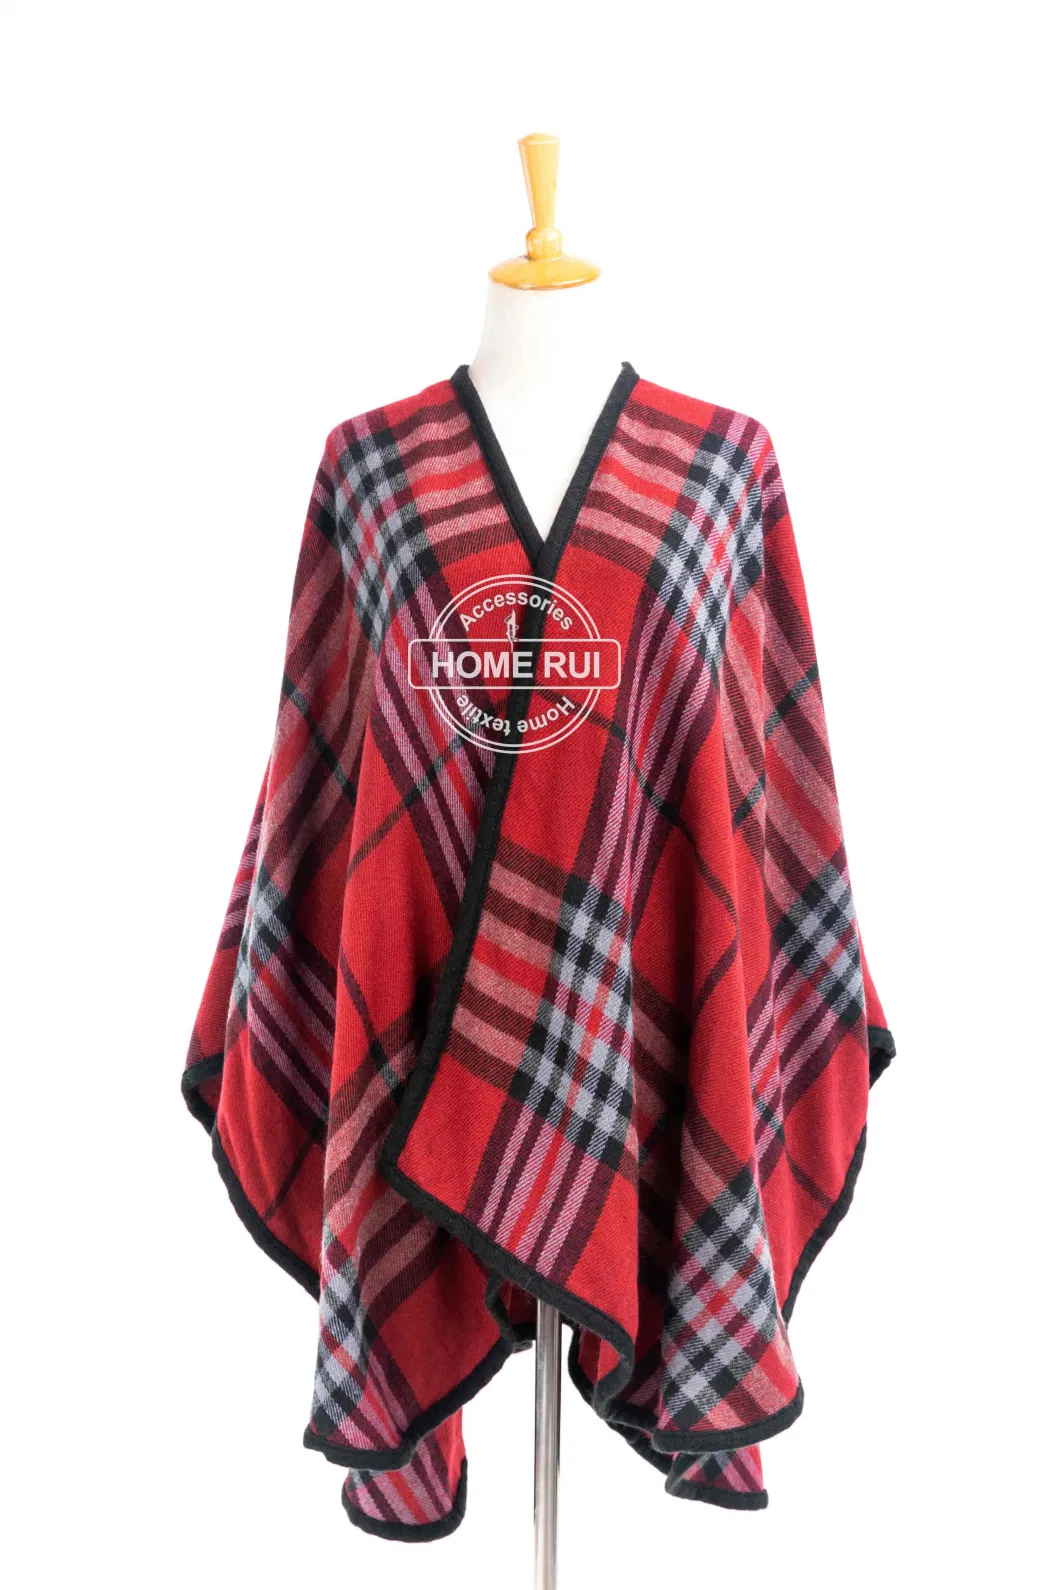 Manufacturer Outfit Fall Winter Lady Fashion Plus Large Batwing Classic Multi Block Tassel Cozy Wraps Nova Scottish Plaid Checks Sweater Cape Poncho Pallium